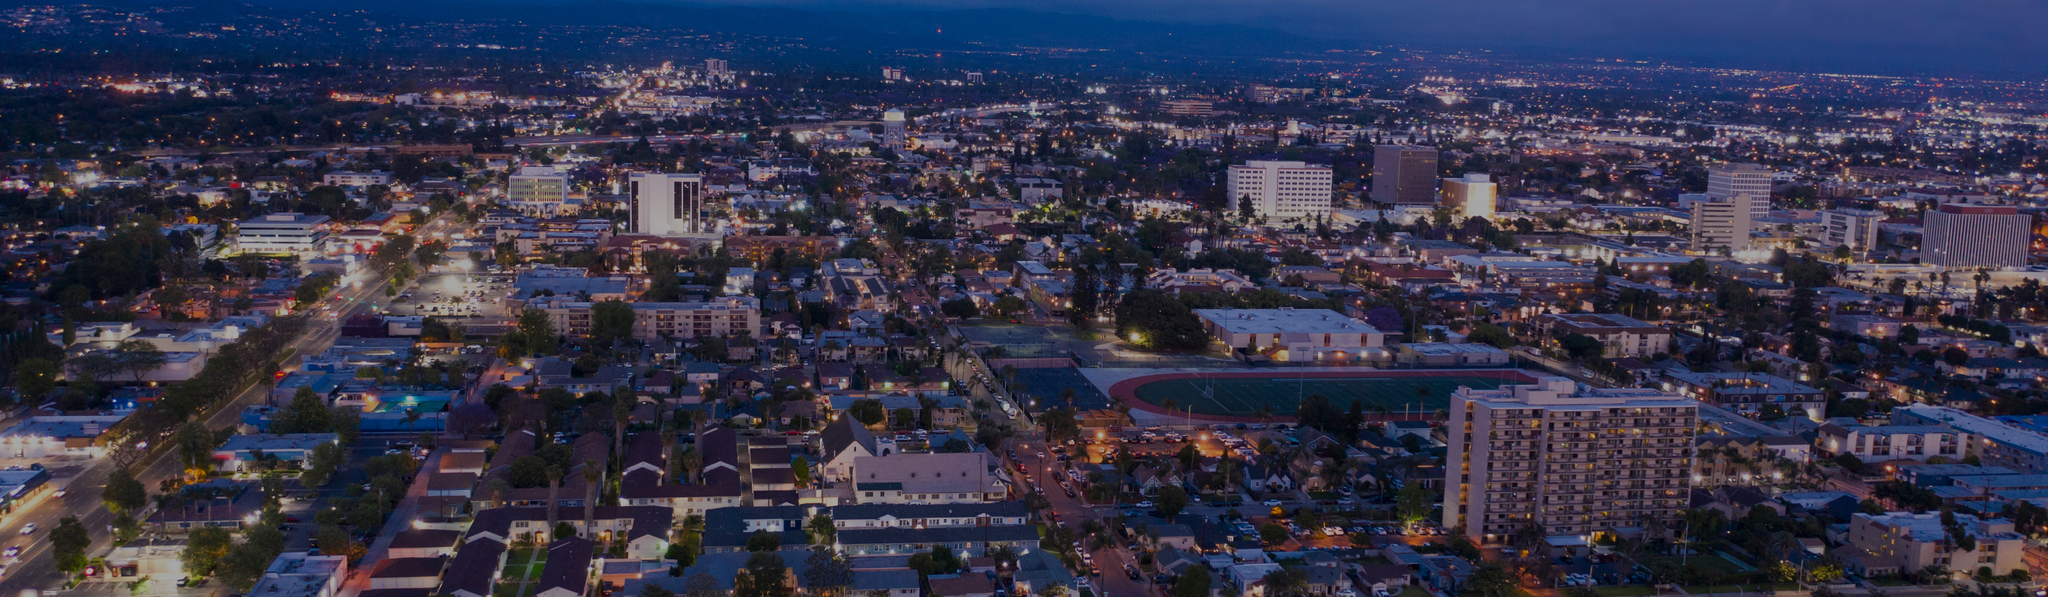 Aerial view of Santa Ana